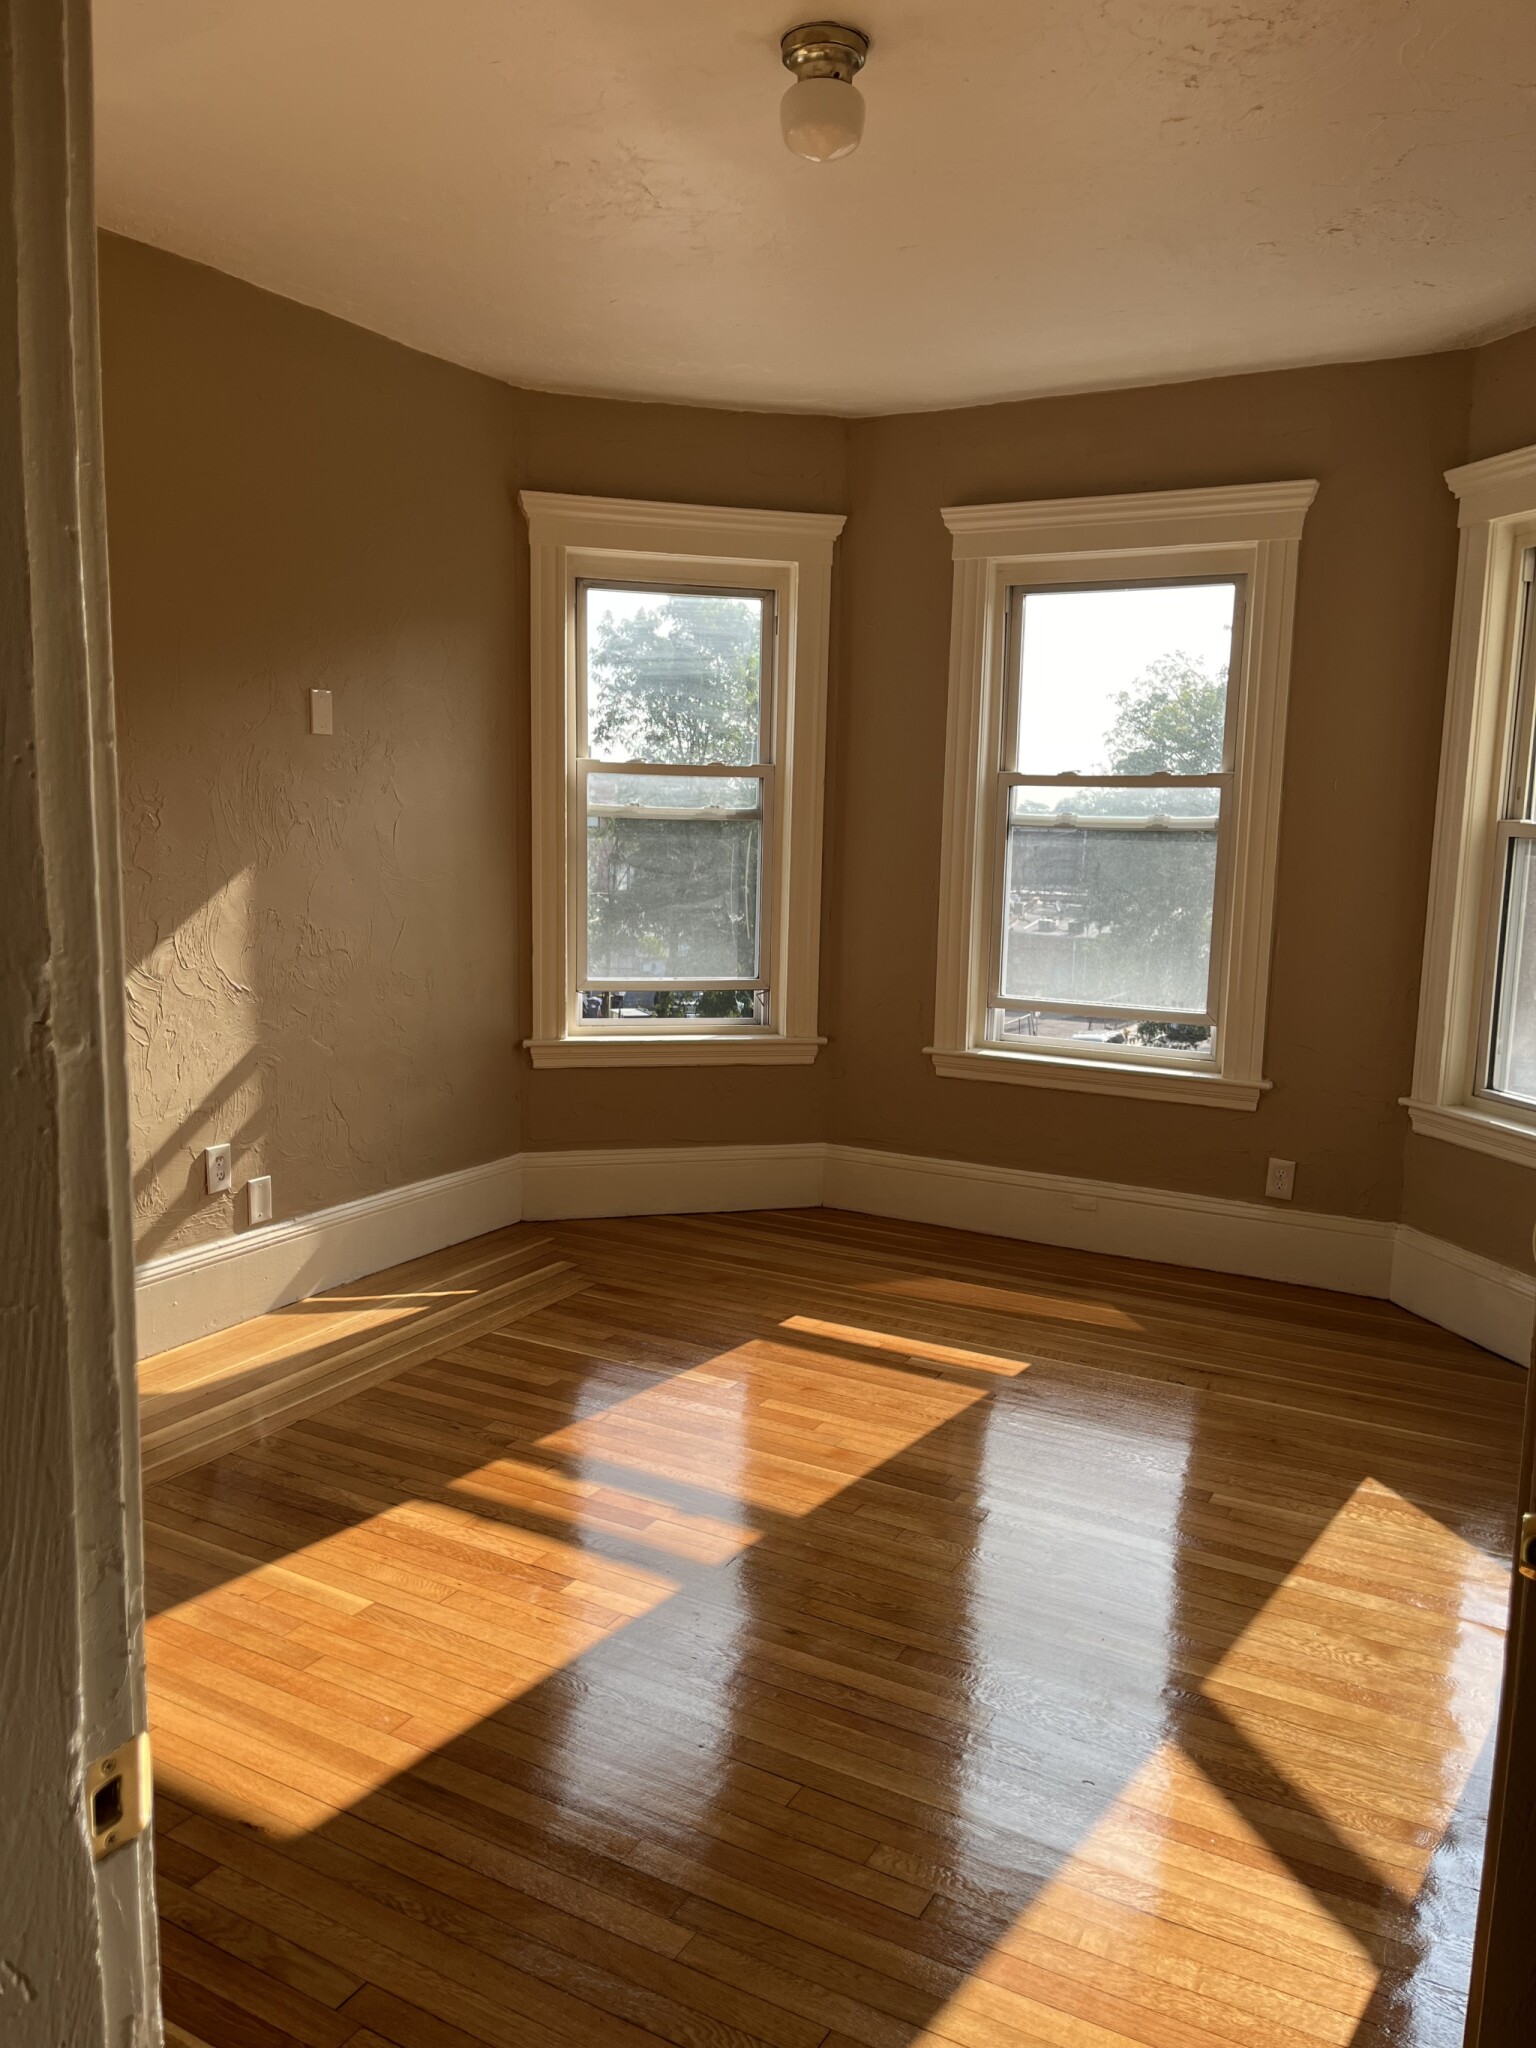 Photos of apartment on Howland St.,Boston MA 02121